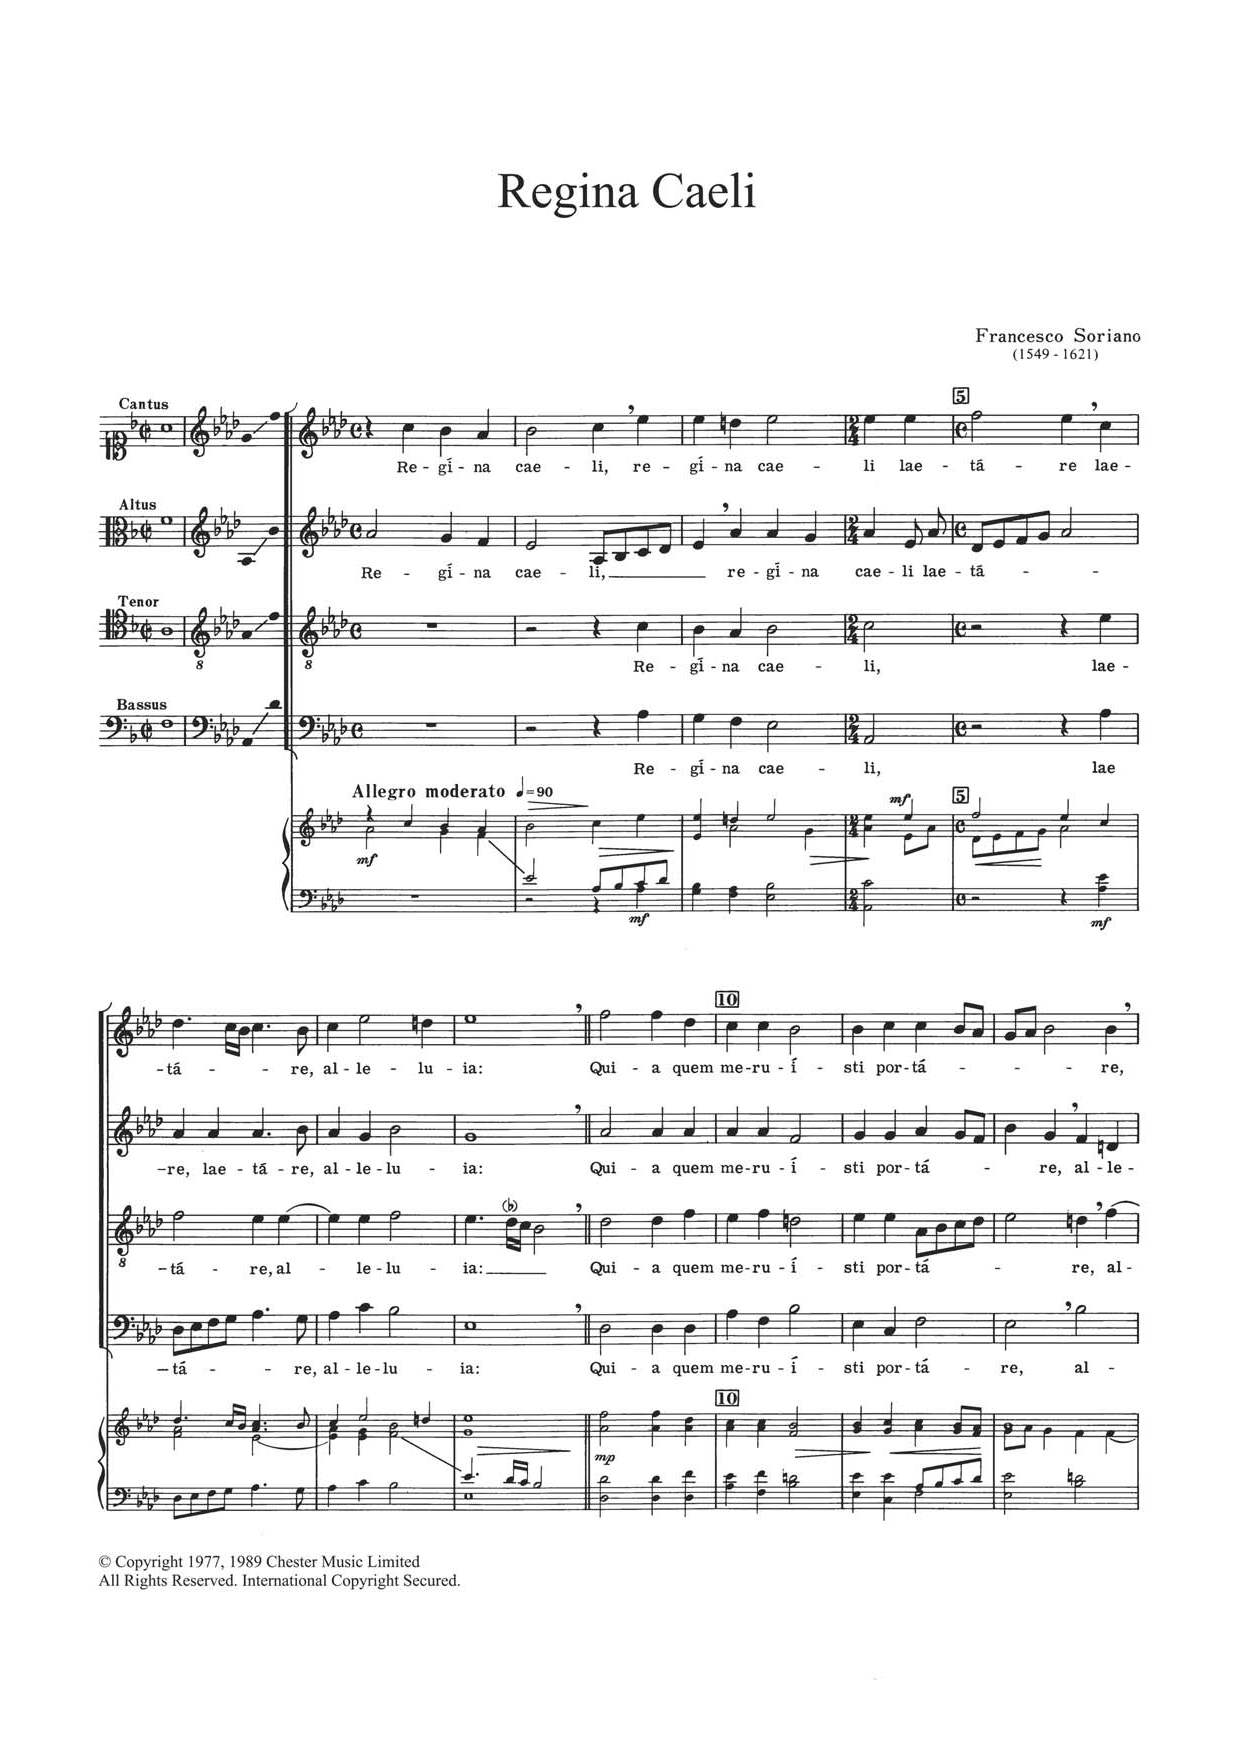 Francesco Soriano Regina Caeli Sheet Music Notes & Chords for Choir - Download or Print PDF